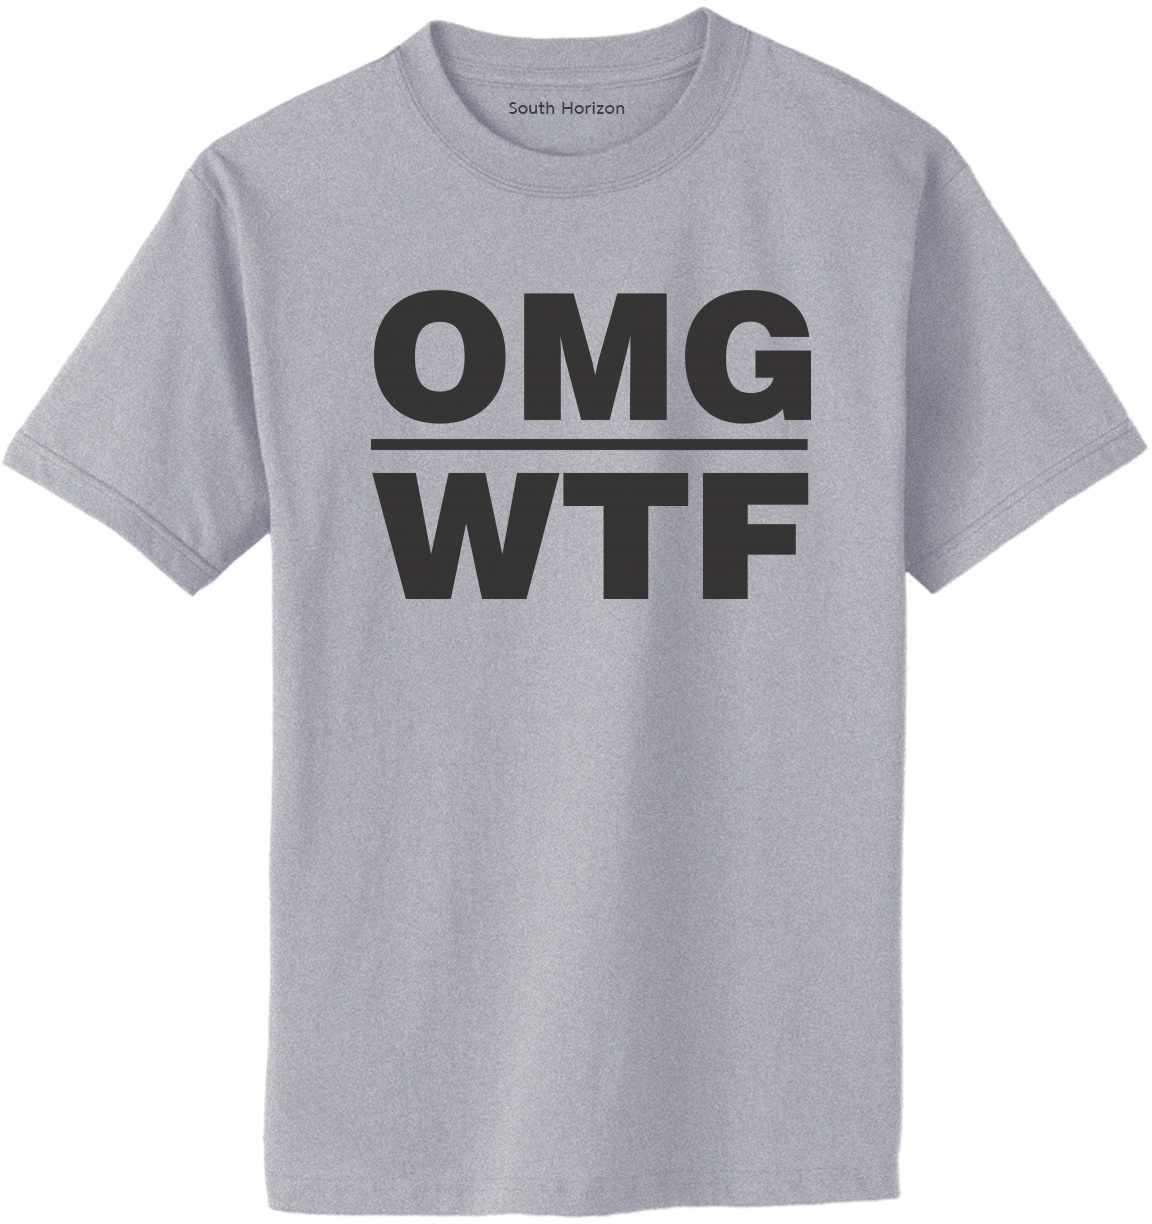 OMG - WTF on Adult T-Shirt (#757-1)